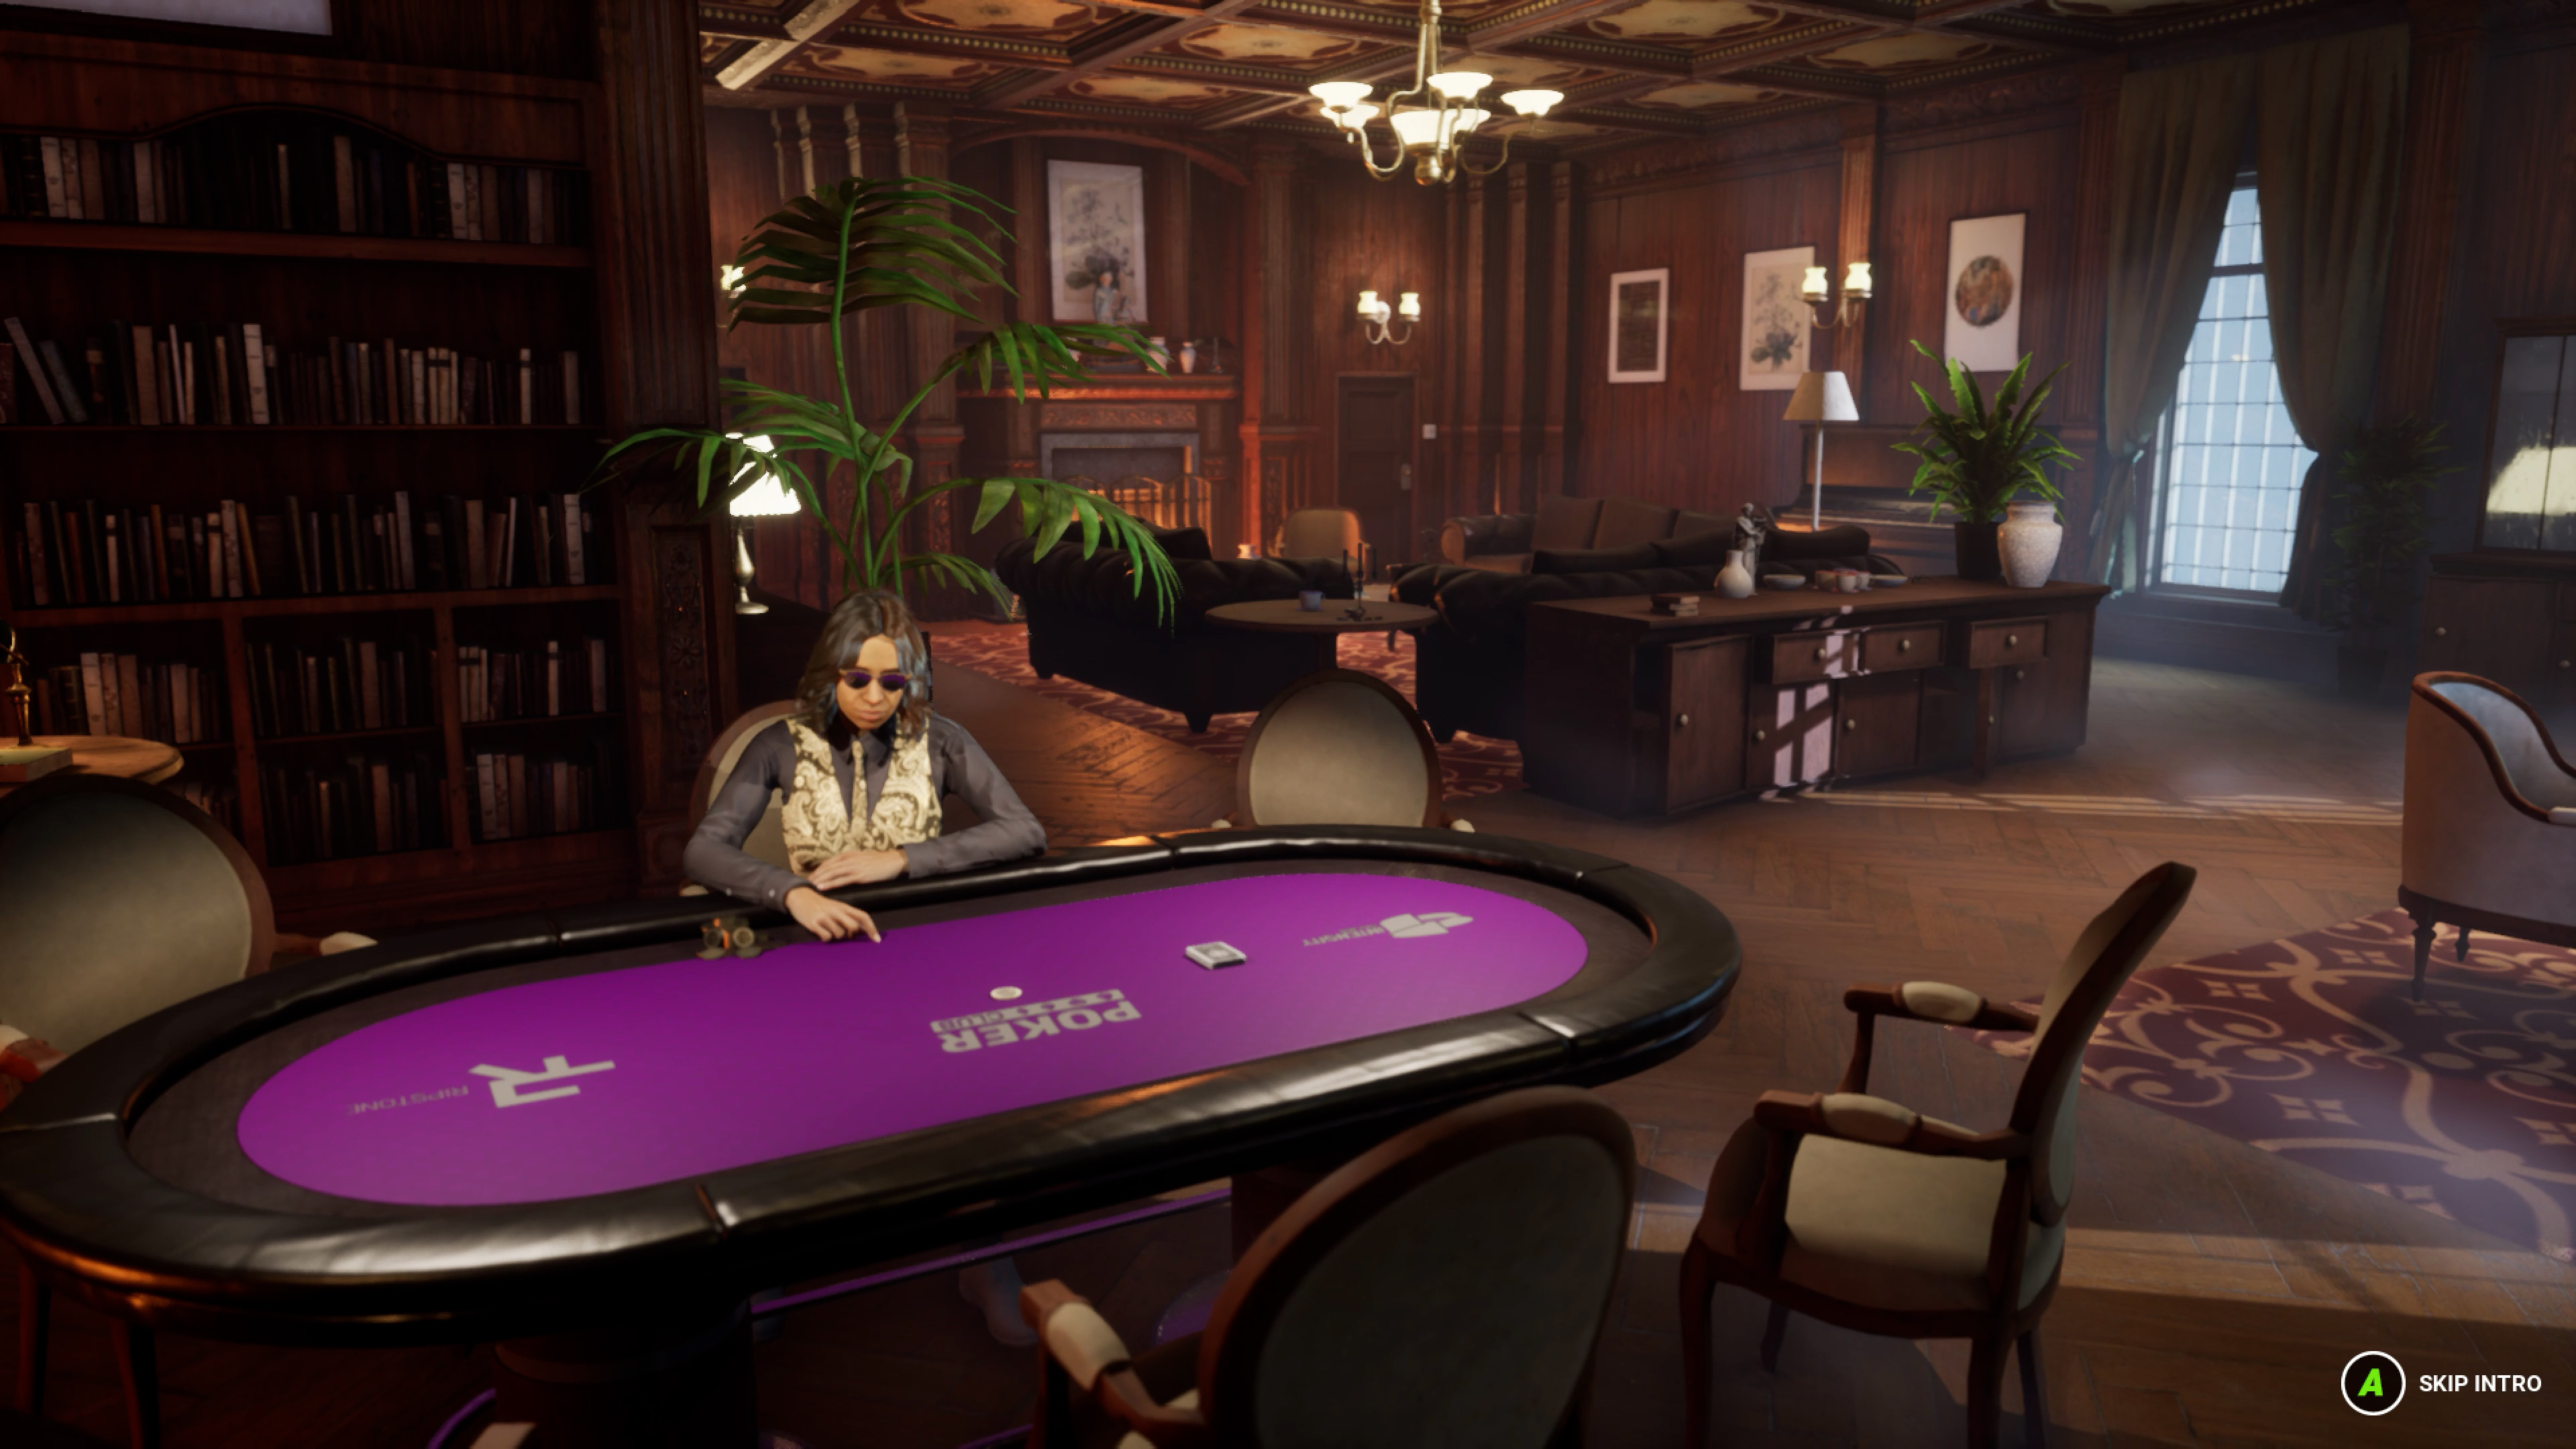 Poker Club - Join the Poker Club Discord Server - Steam News